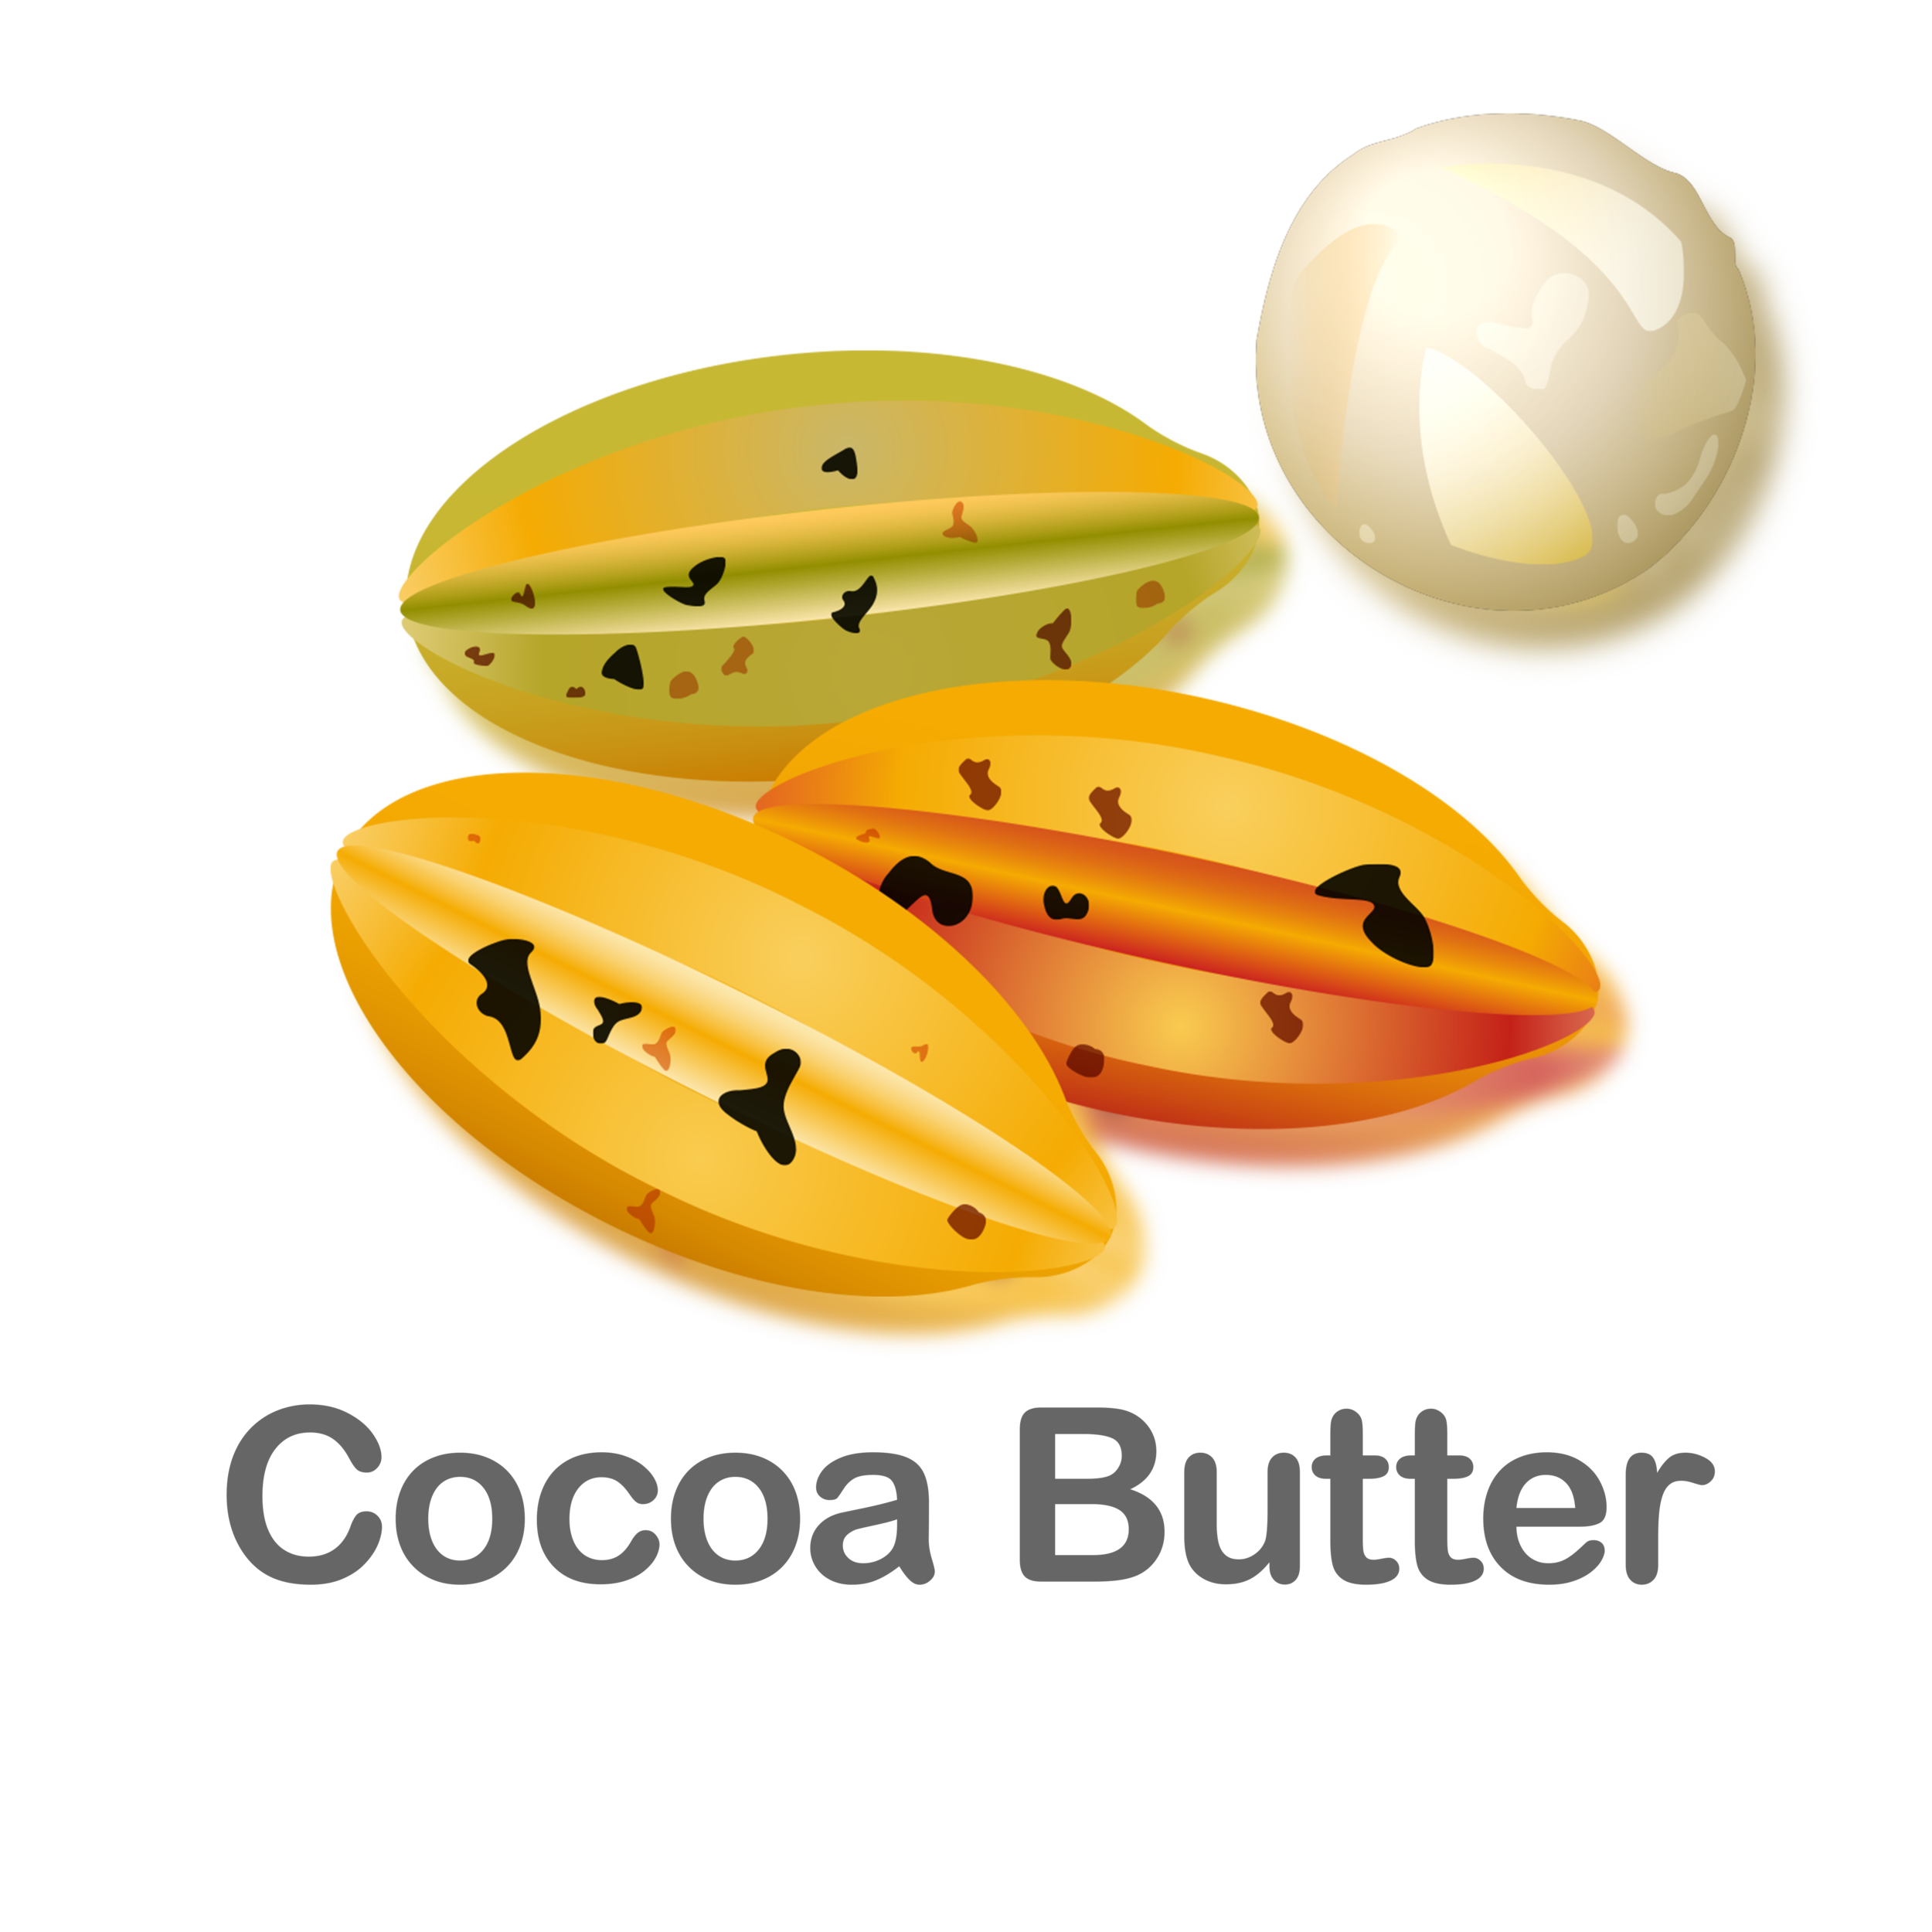 Cocoa Butter (Copy)